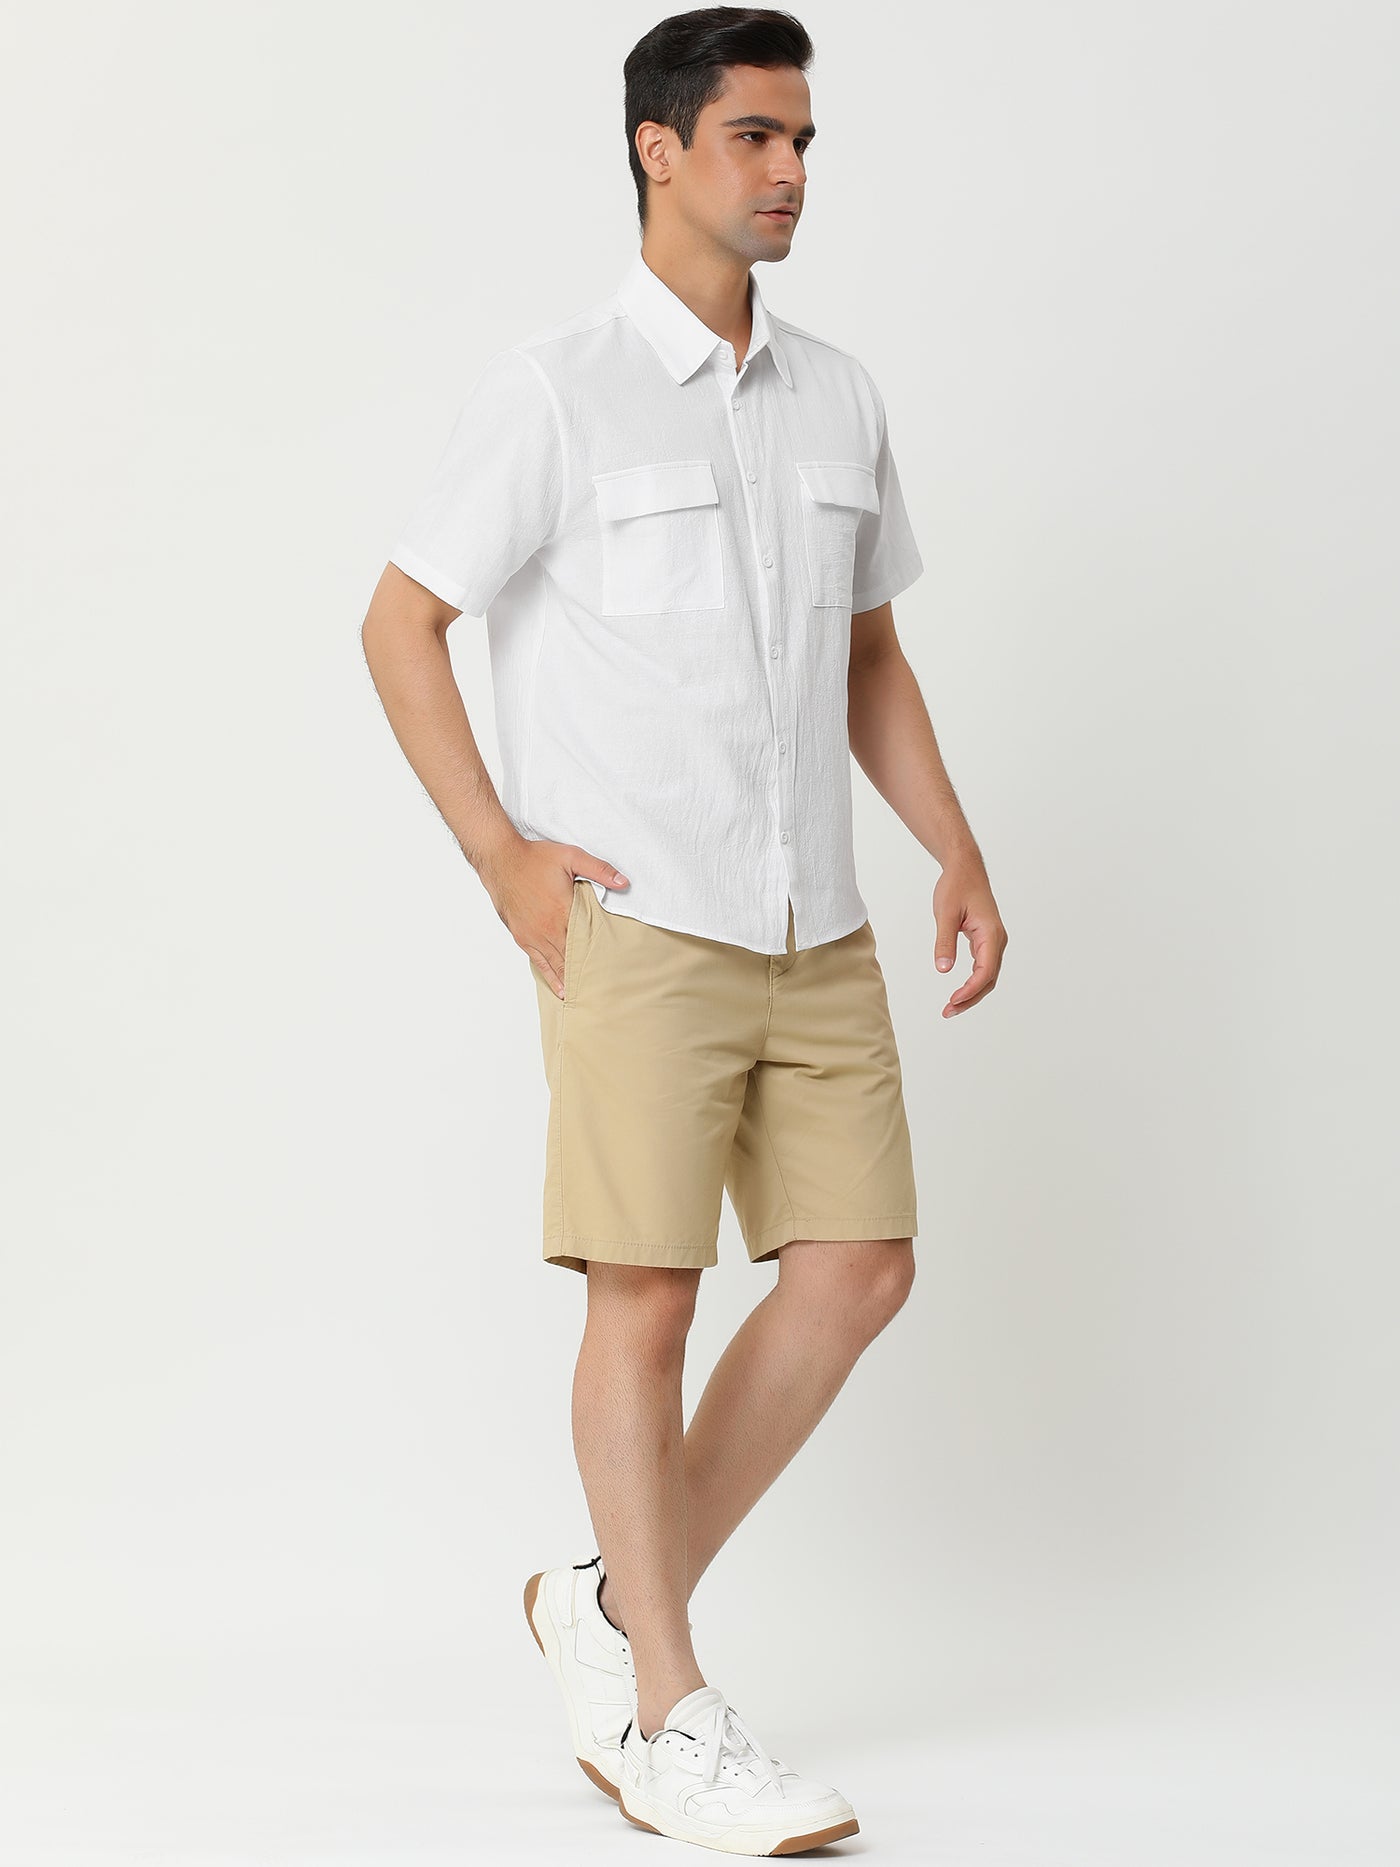 Bublédon Summer Point collar Short Sleeve Button Solid Shirts